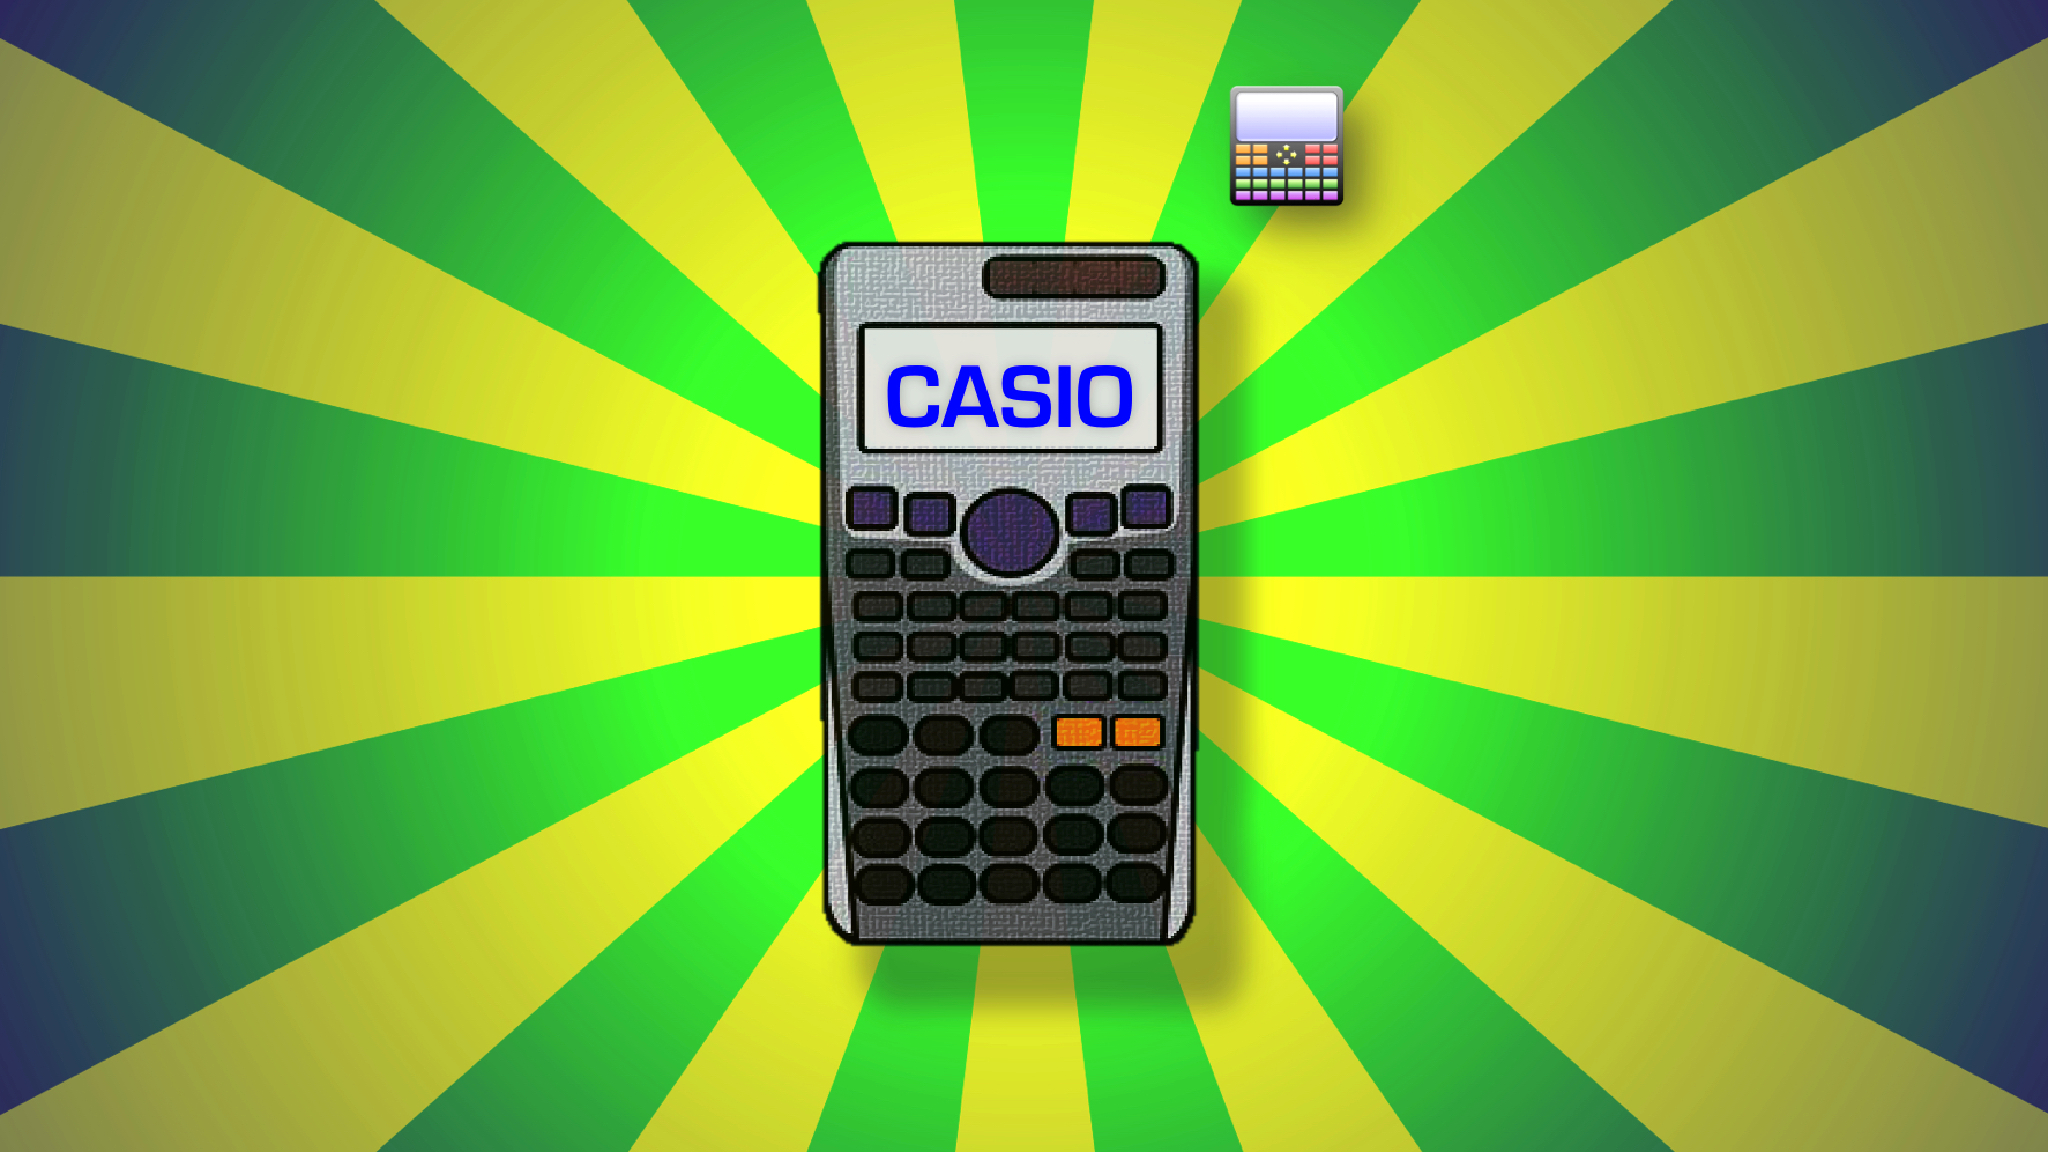 engineering calculator casio